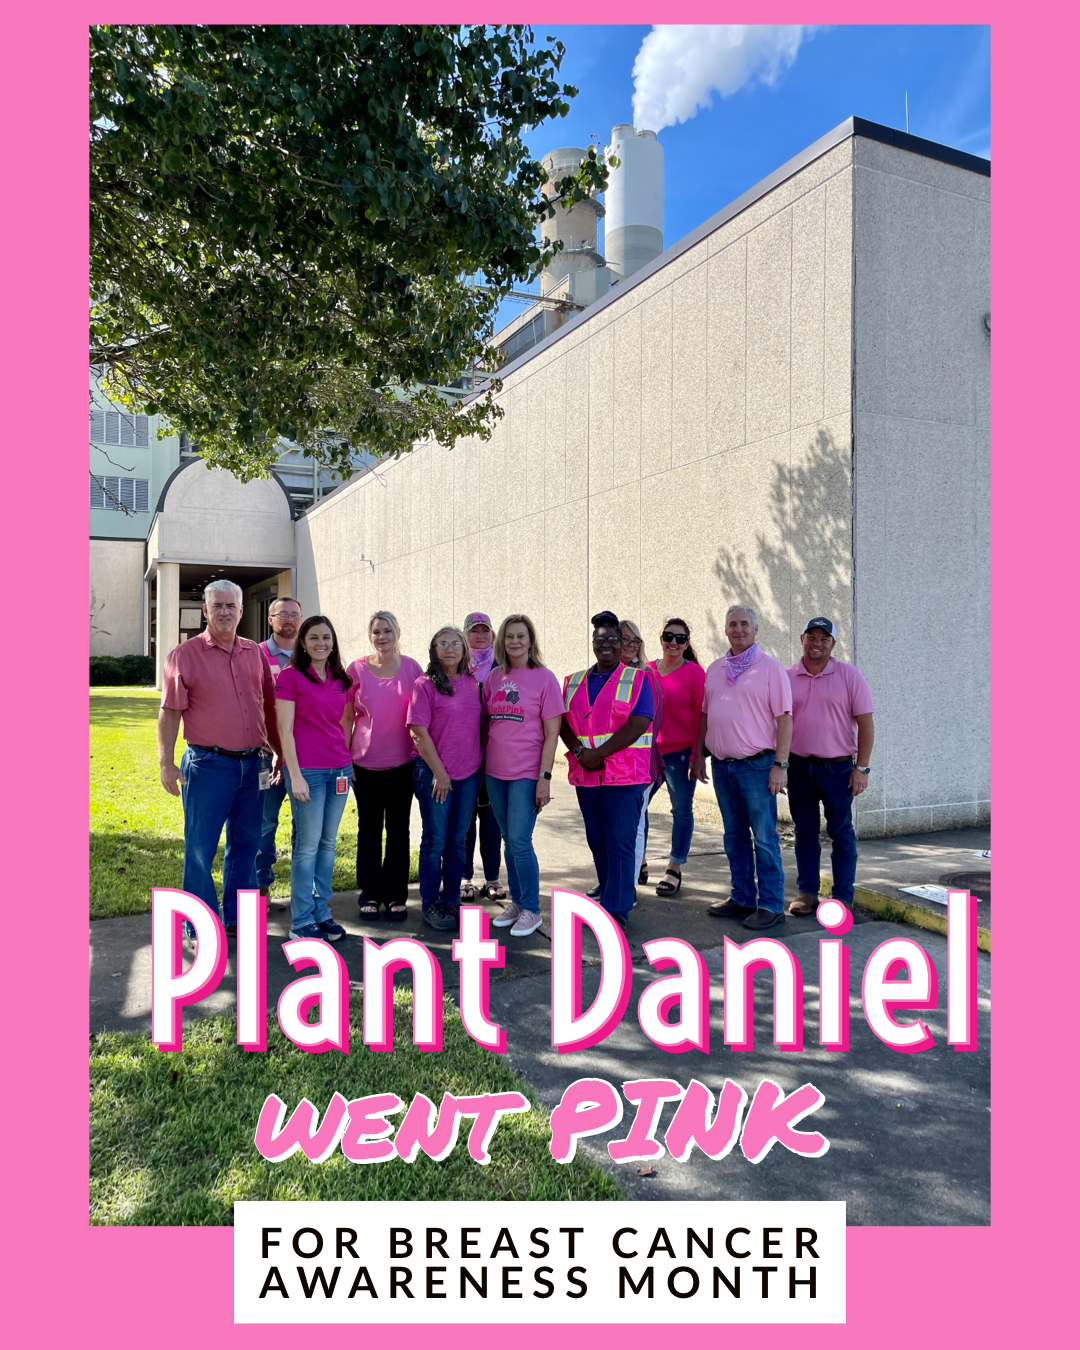 - Brandy Cooley, Administrative Assistant, Plant Daniel